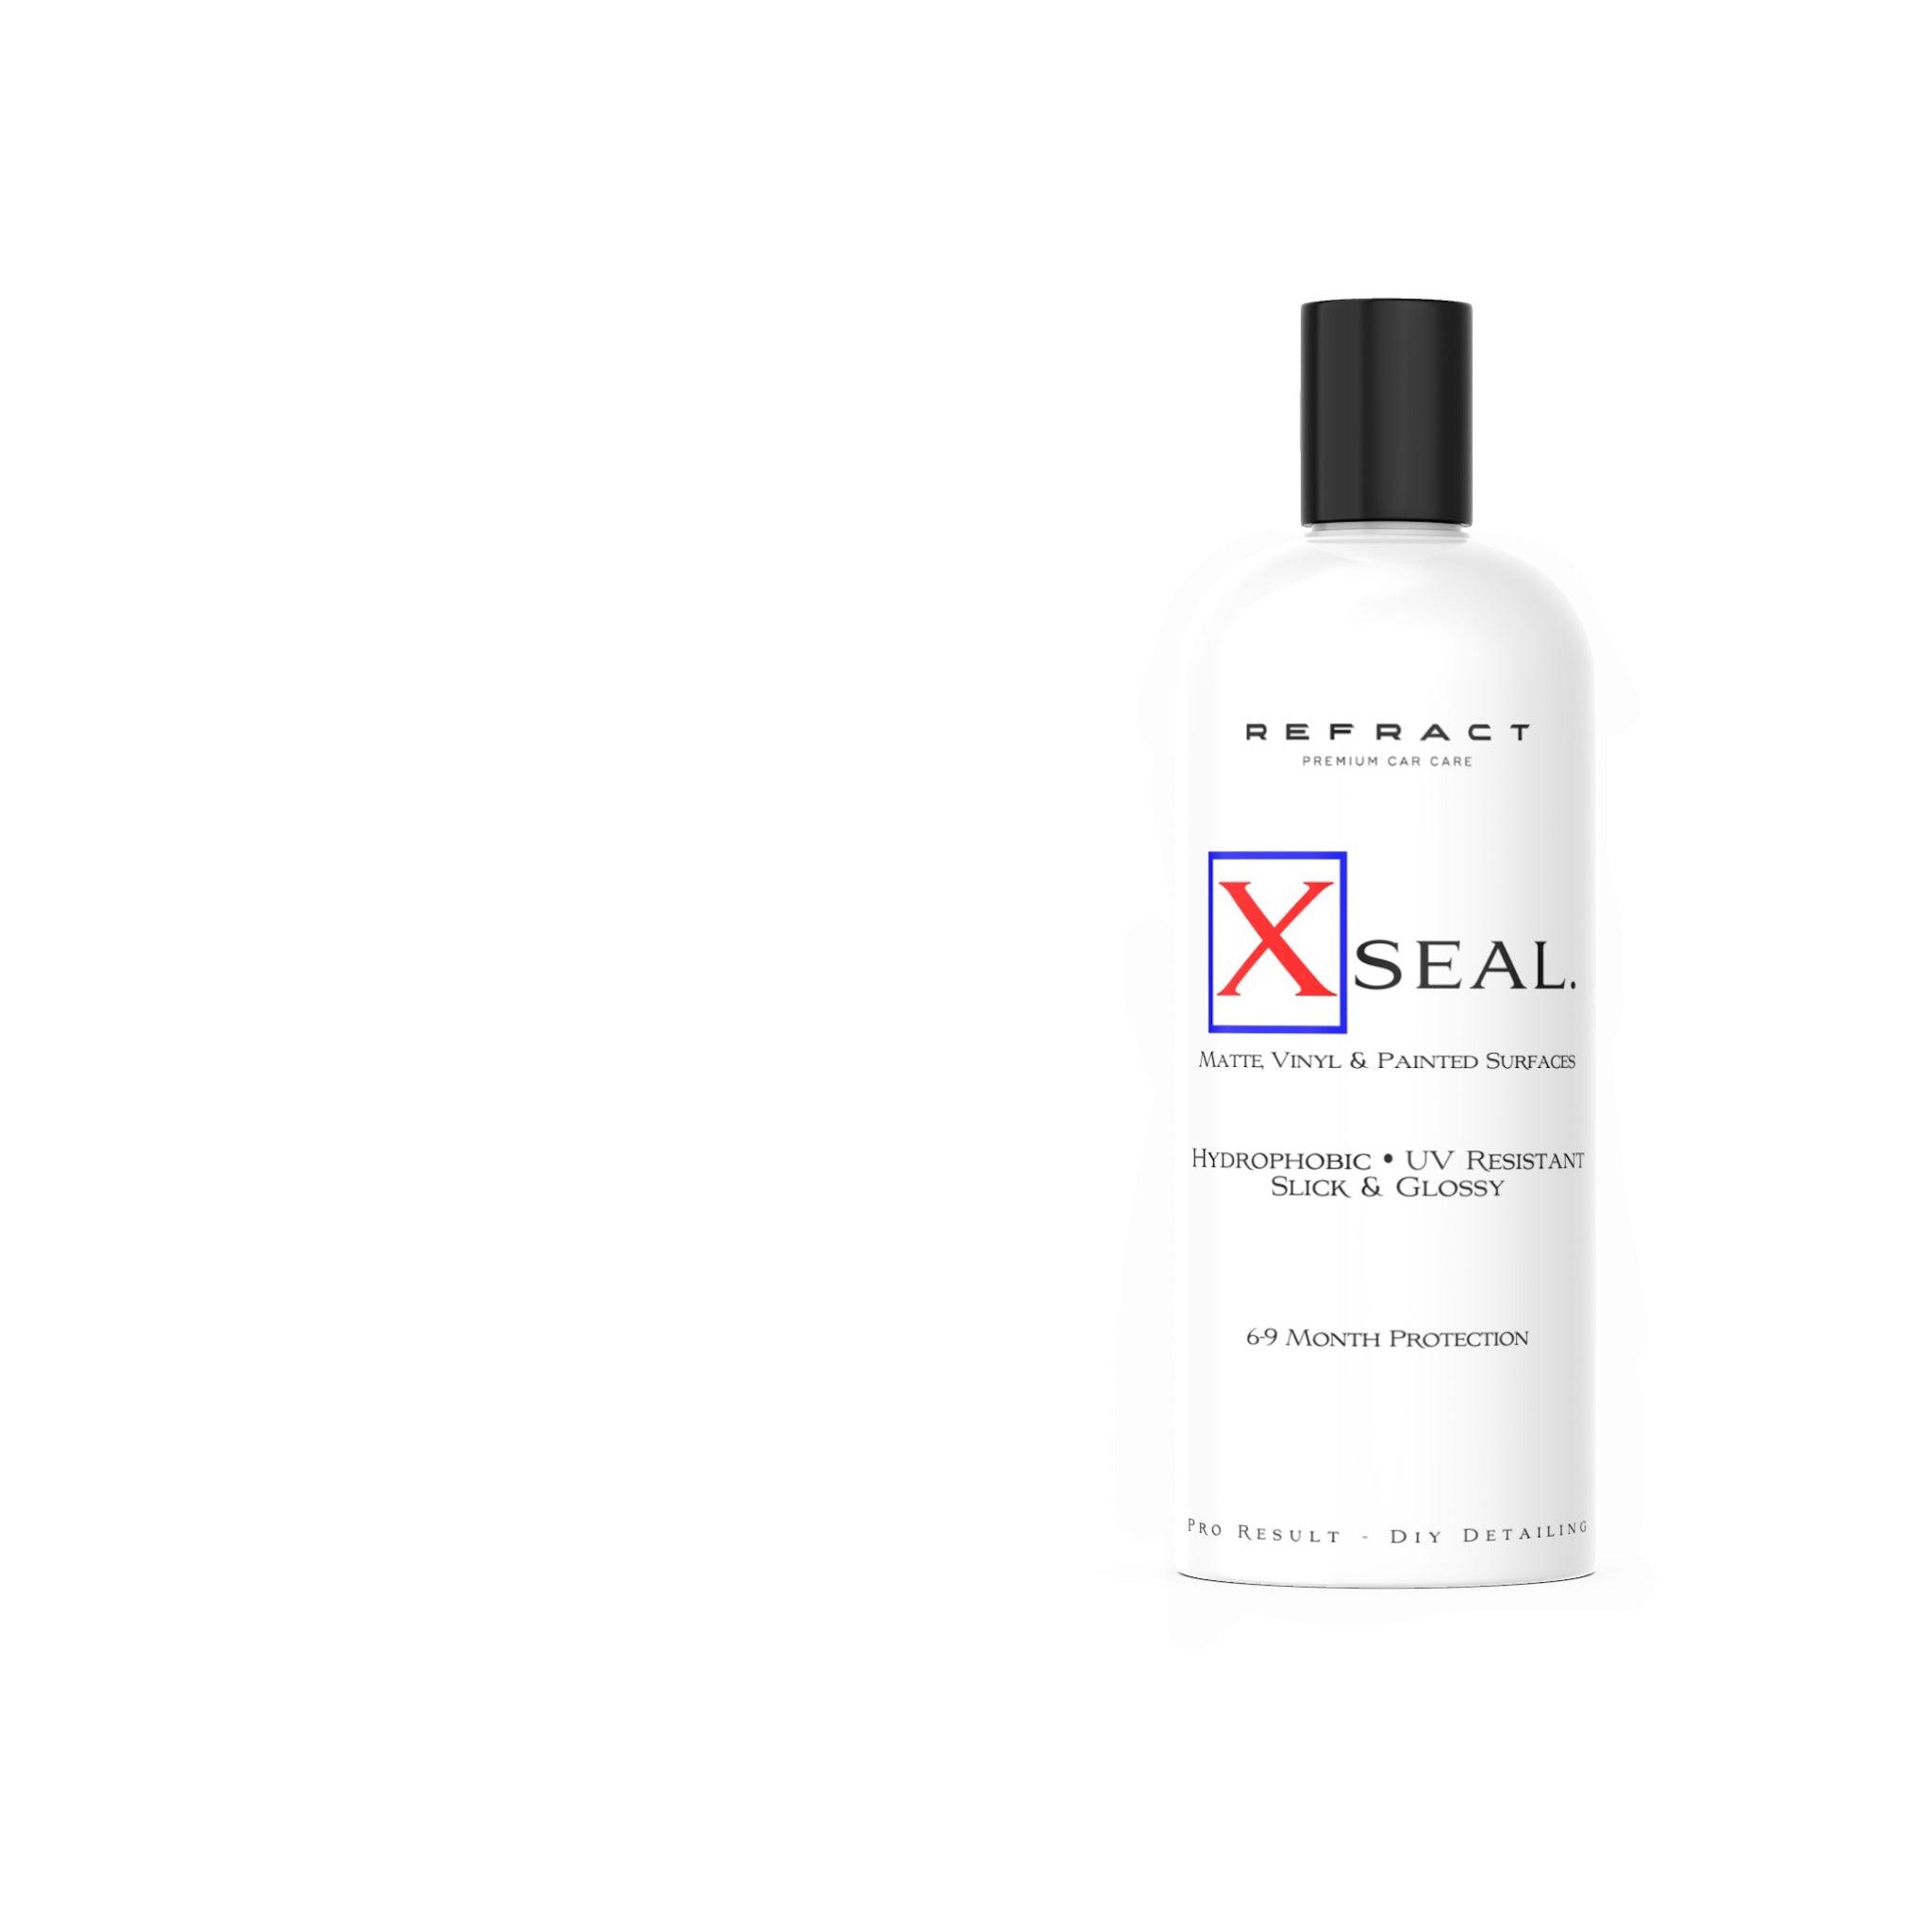 Product Refract X-Seal - Matte, Vinyl & Paint Surface Sealant image